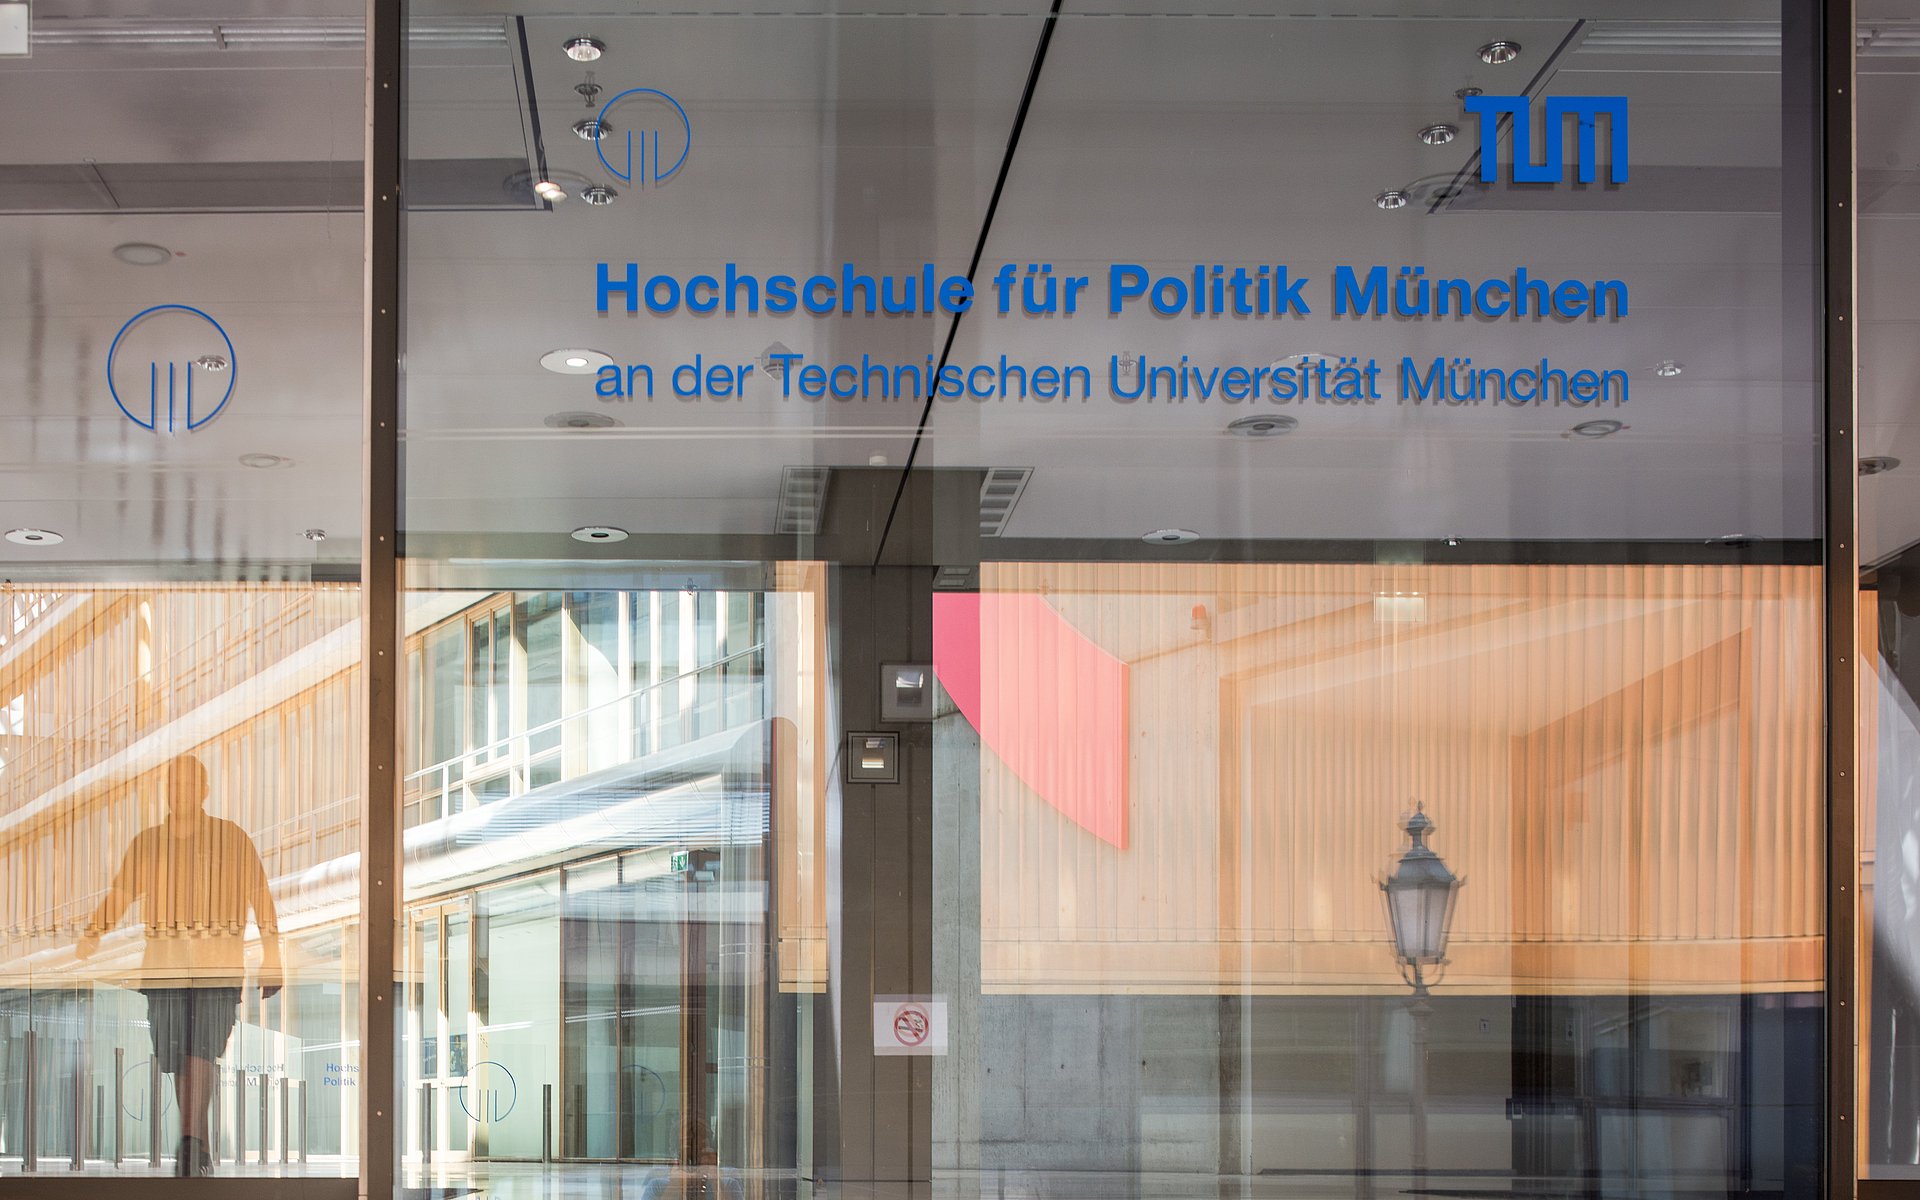 Entrance of the Hochschule für Politik